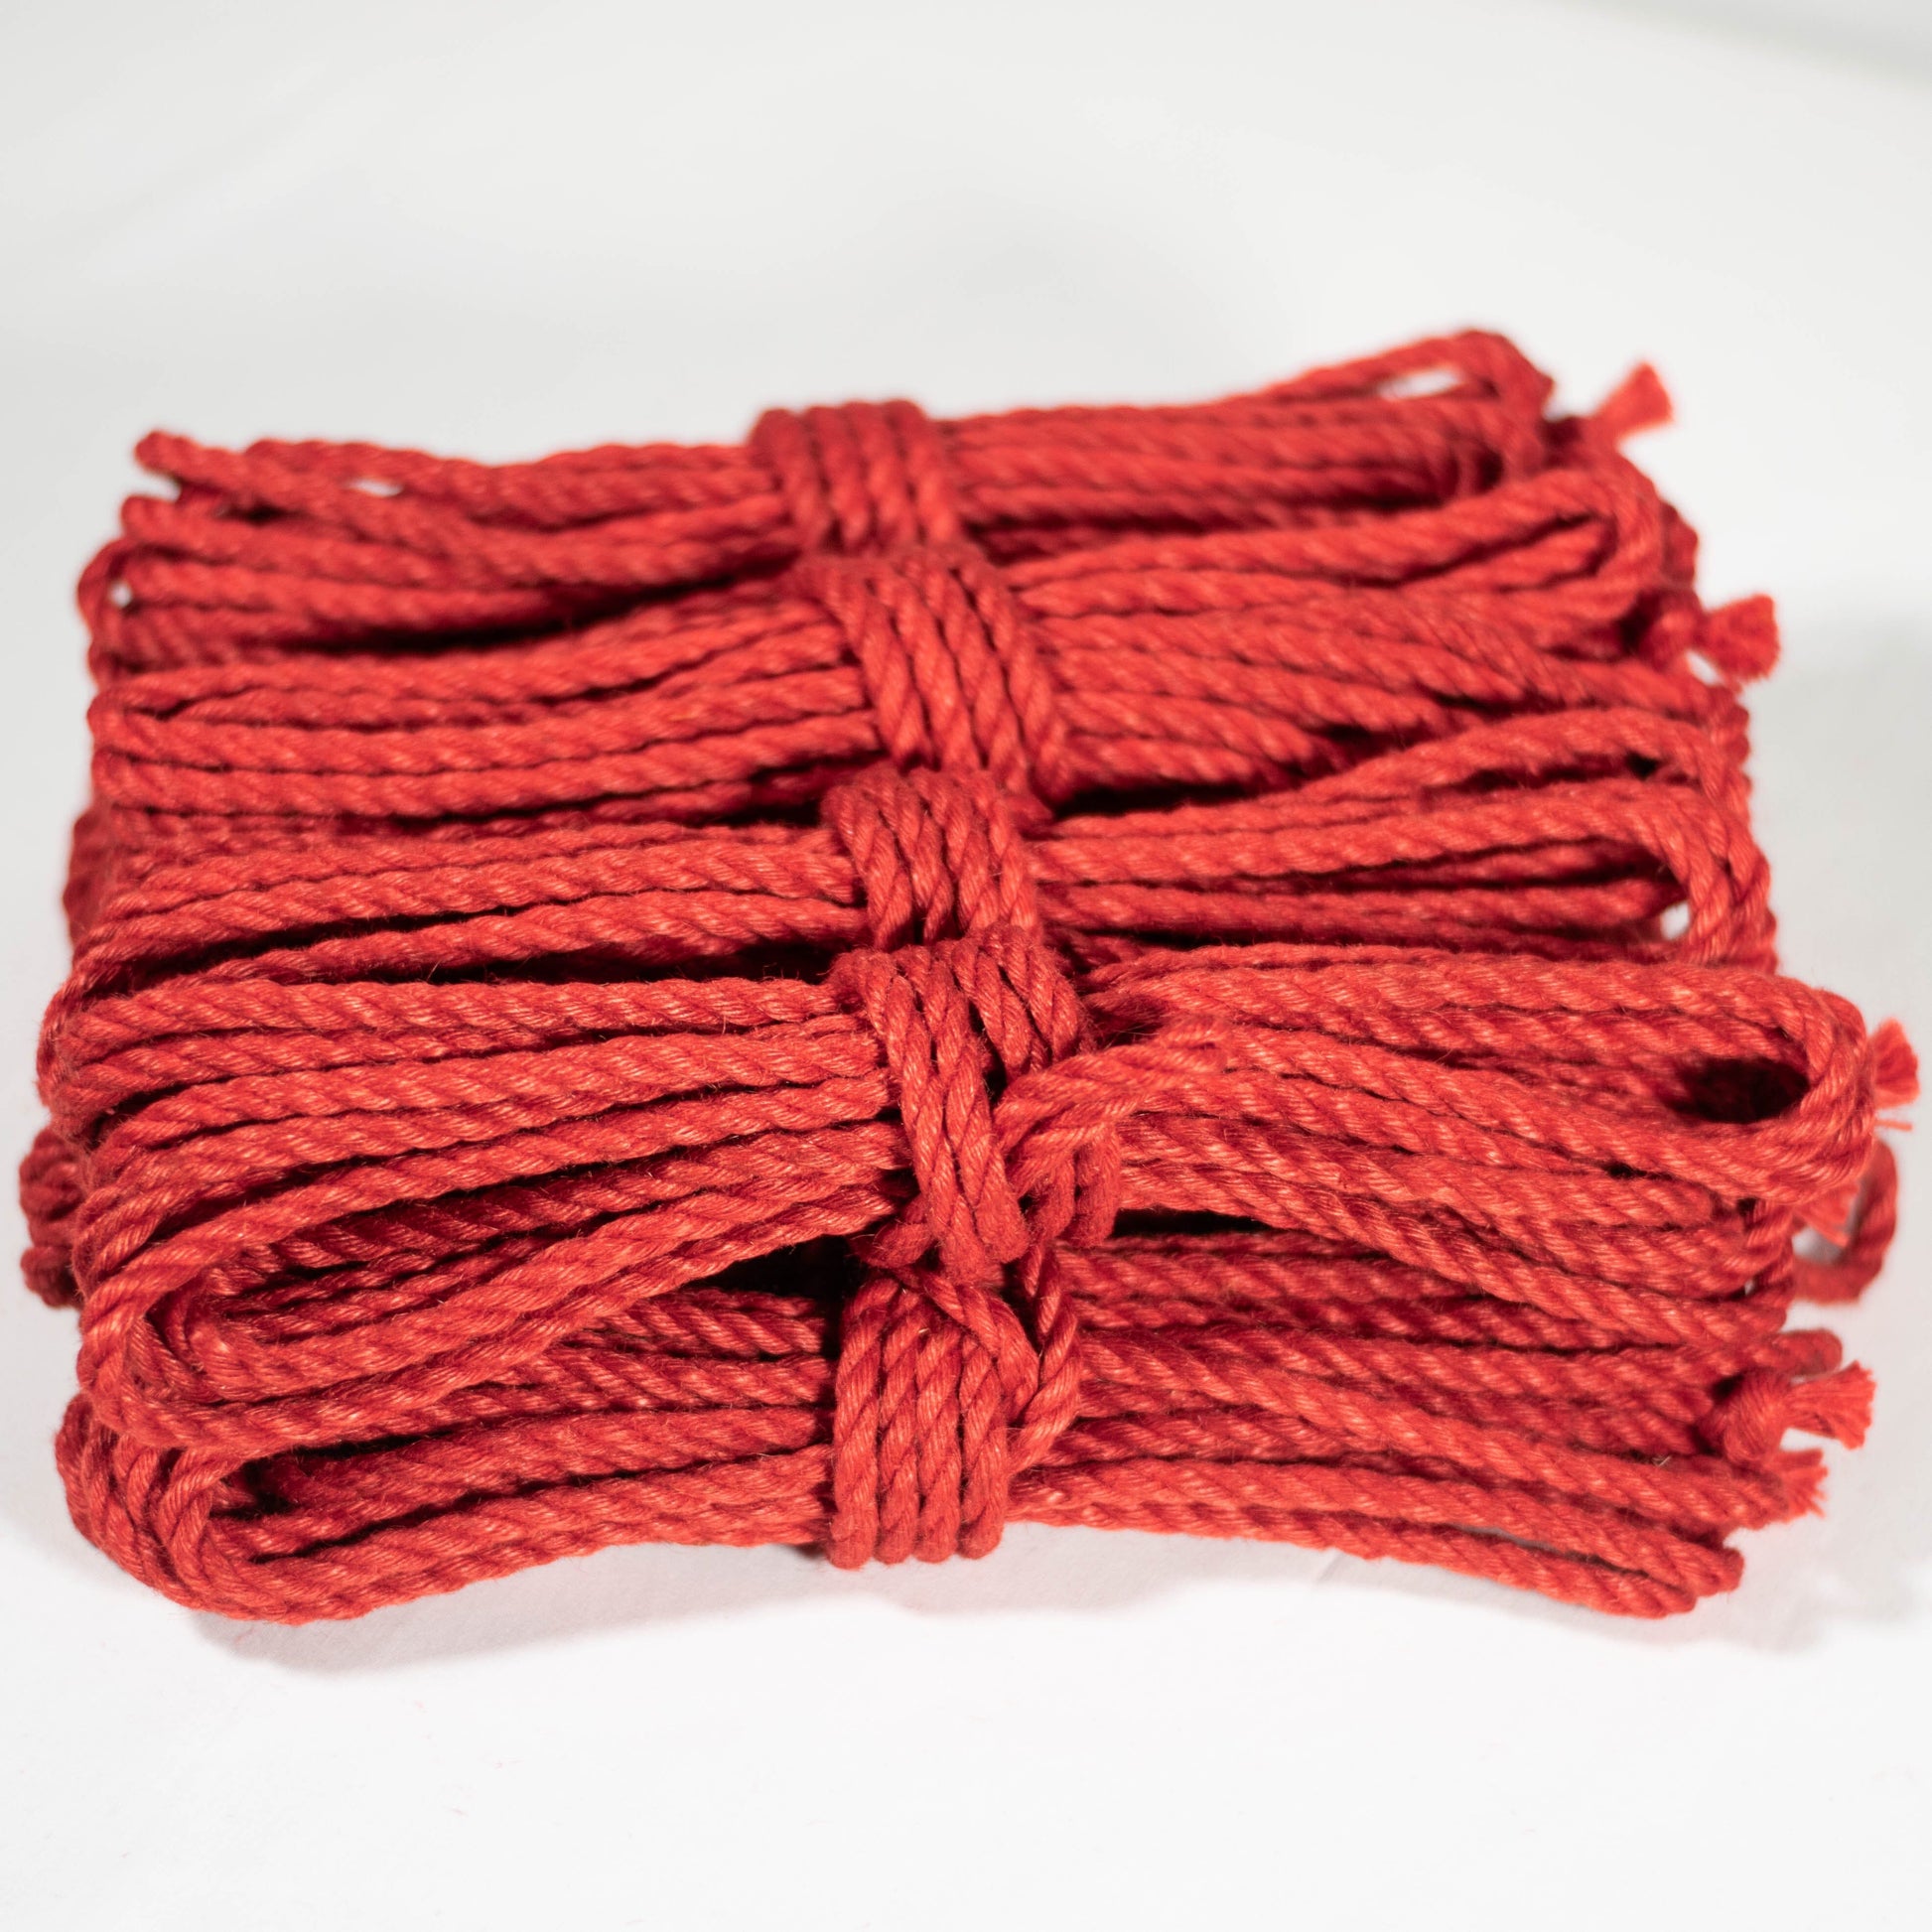 Treated Rope - 6mm Anatomie Red Jute Rope Shibari Rope Bundle of 8 